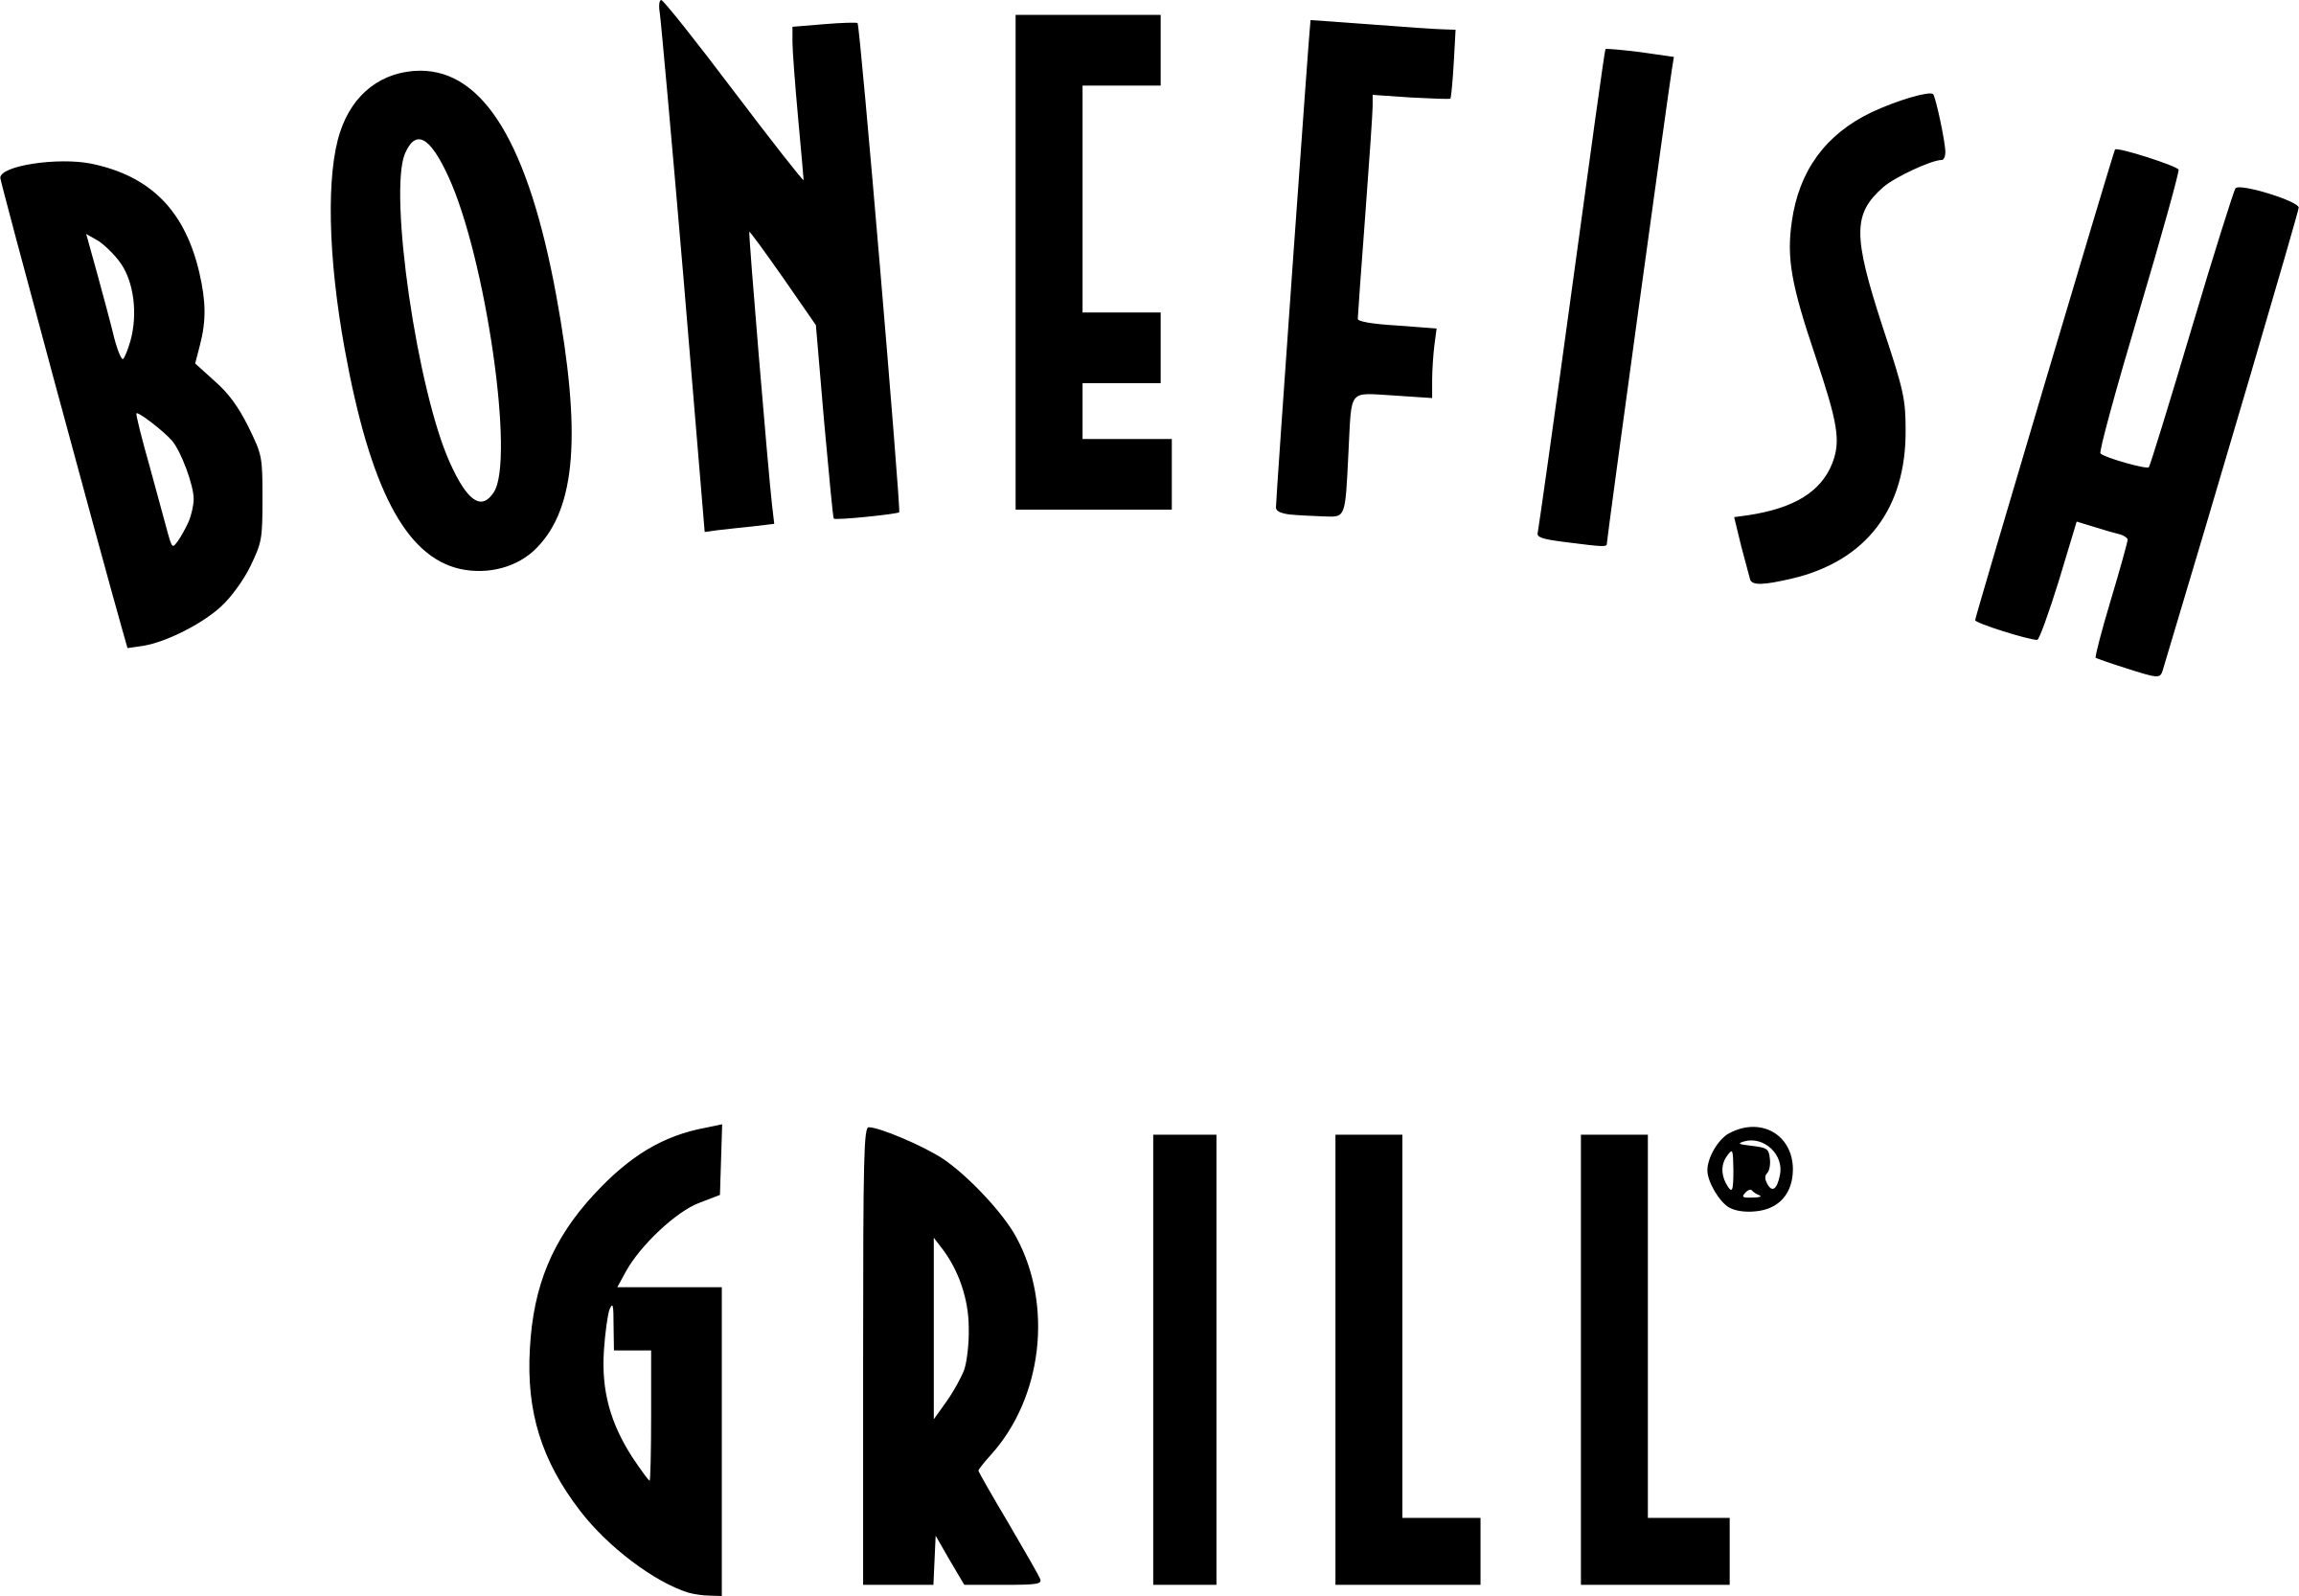 Bonefish Logo - Bonefish grill Logo PNG Transparent & SVG Vector - Freebie Supply